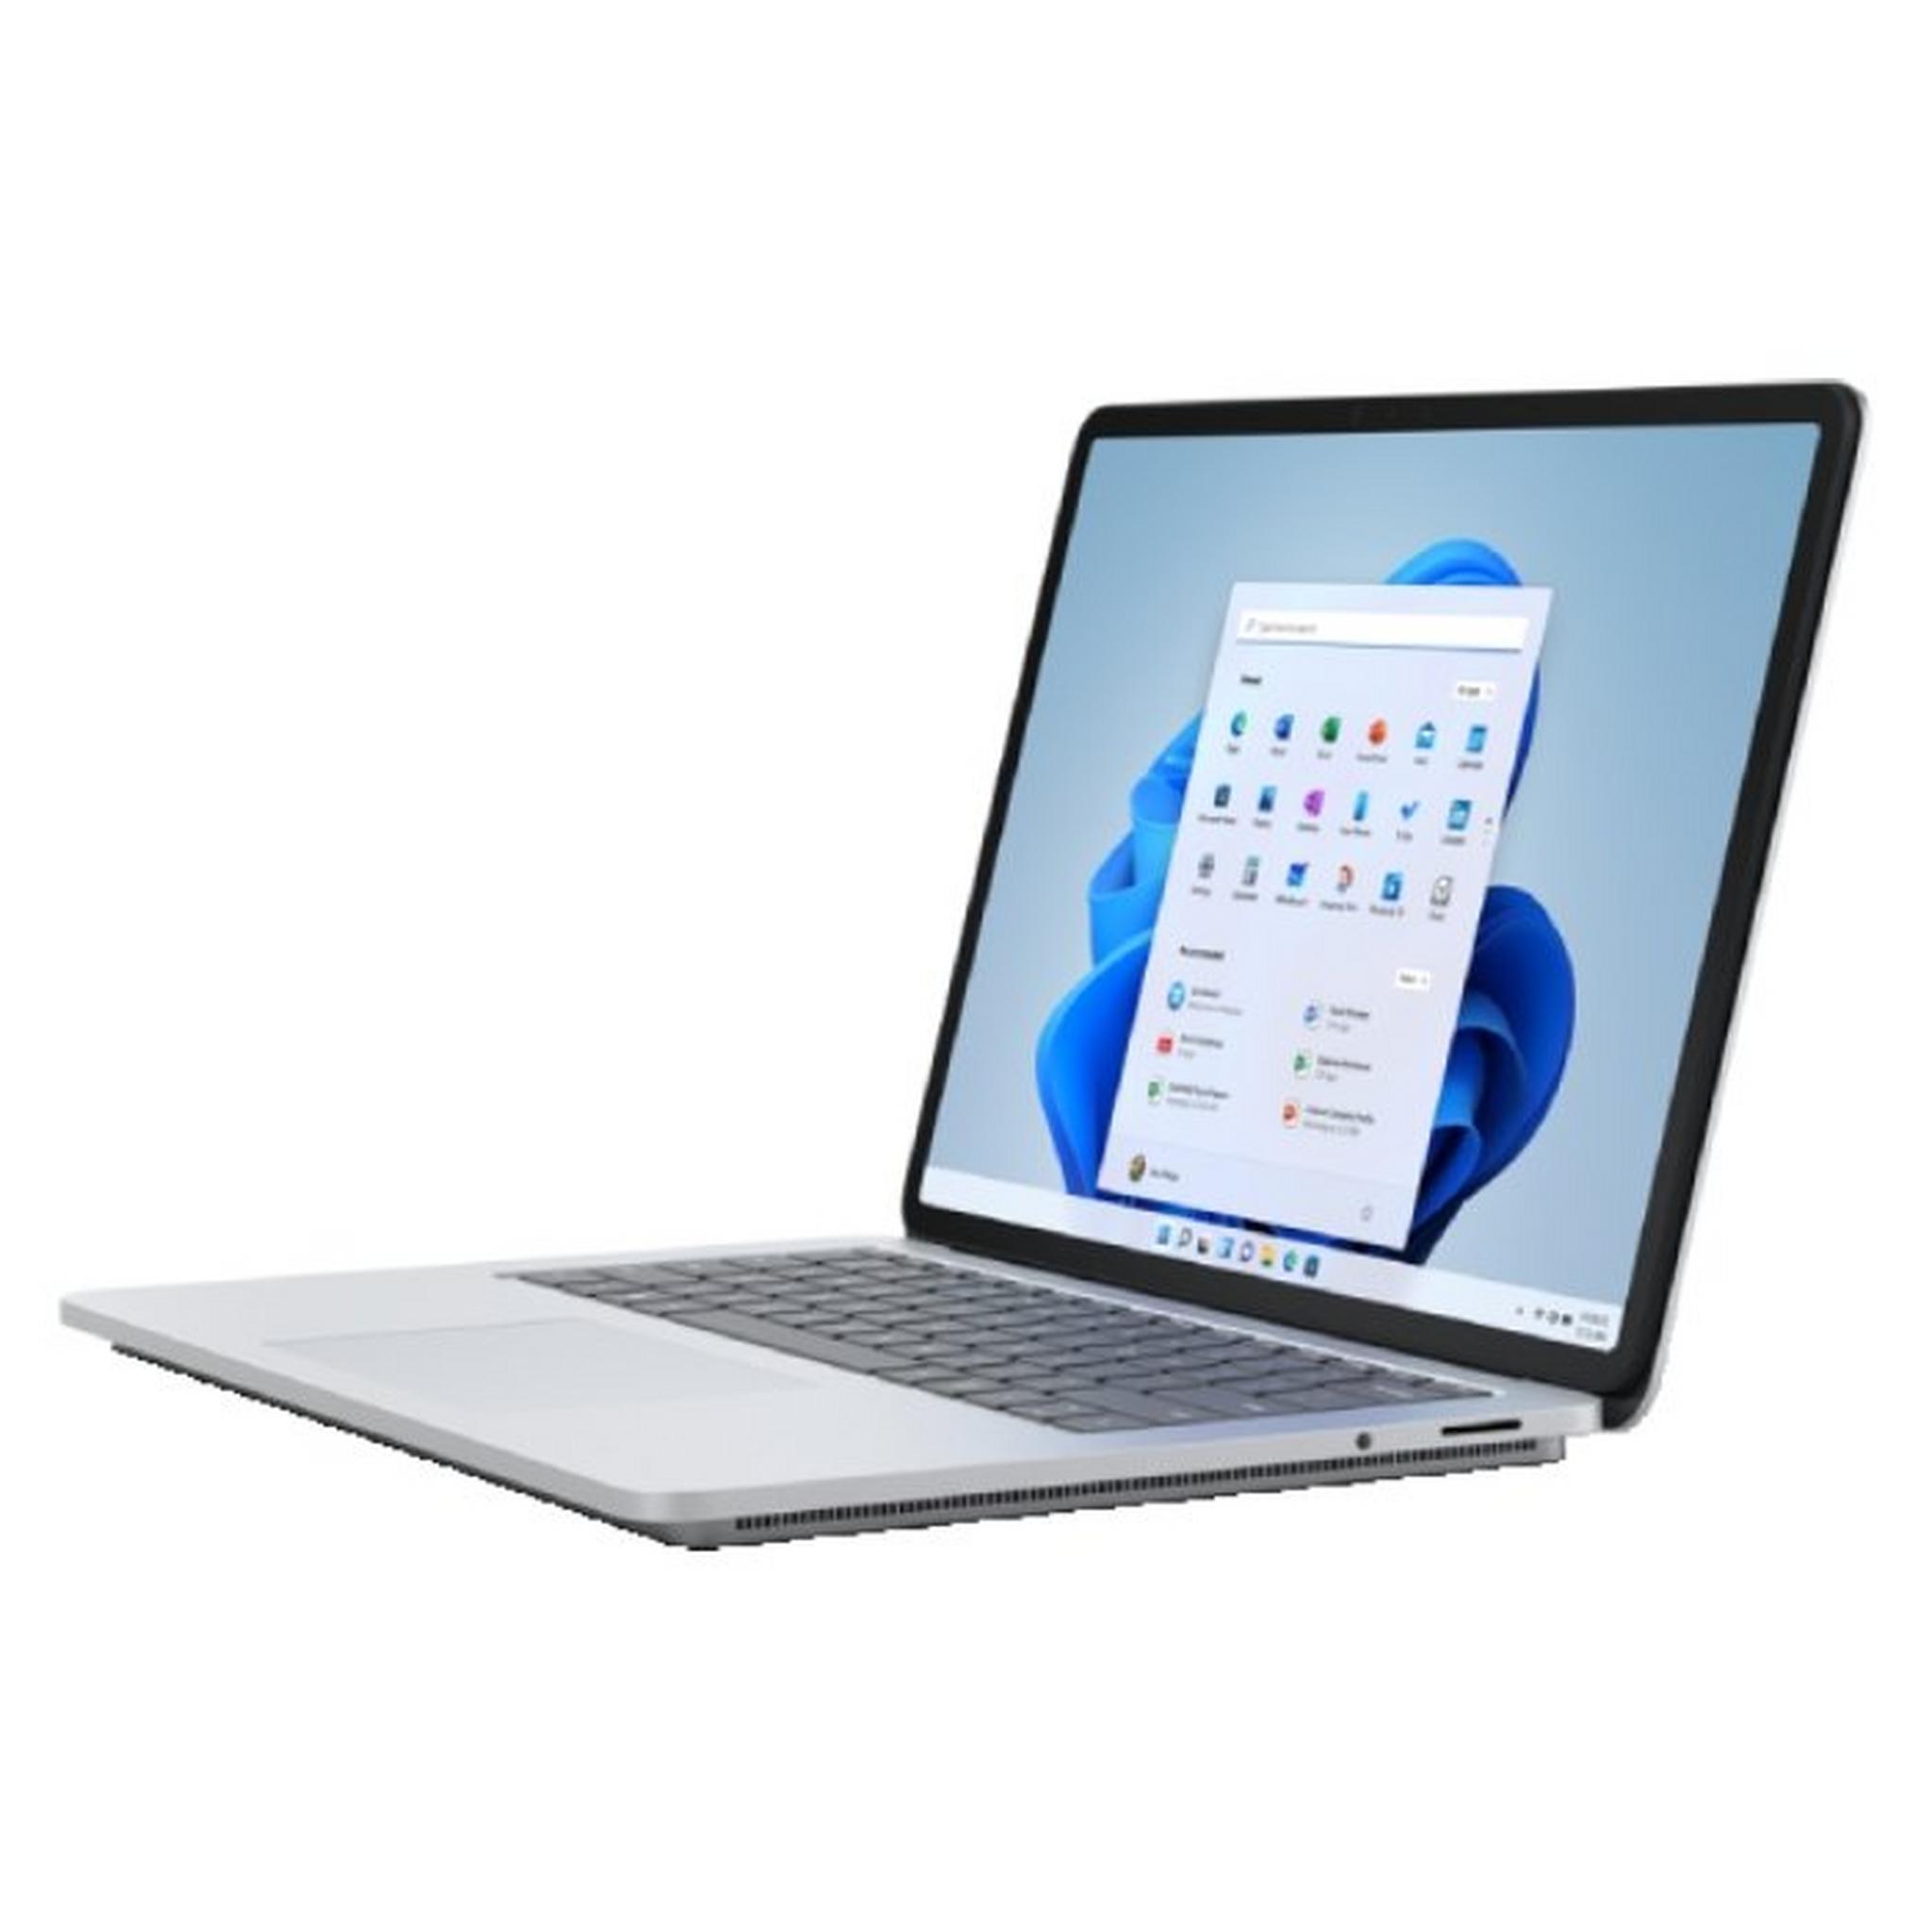 Microsoft Surface Studio Intel Core i7 11th Gen, 16GB RAM, 512GB SSD, 14-inch Convertible Laptop - Platinum